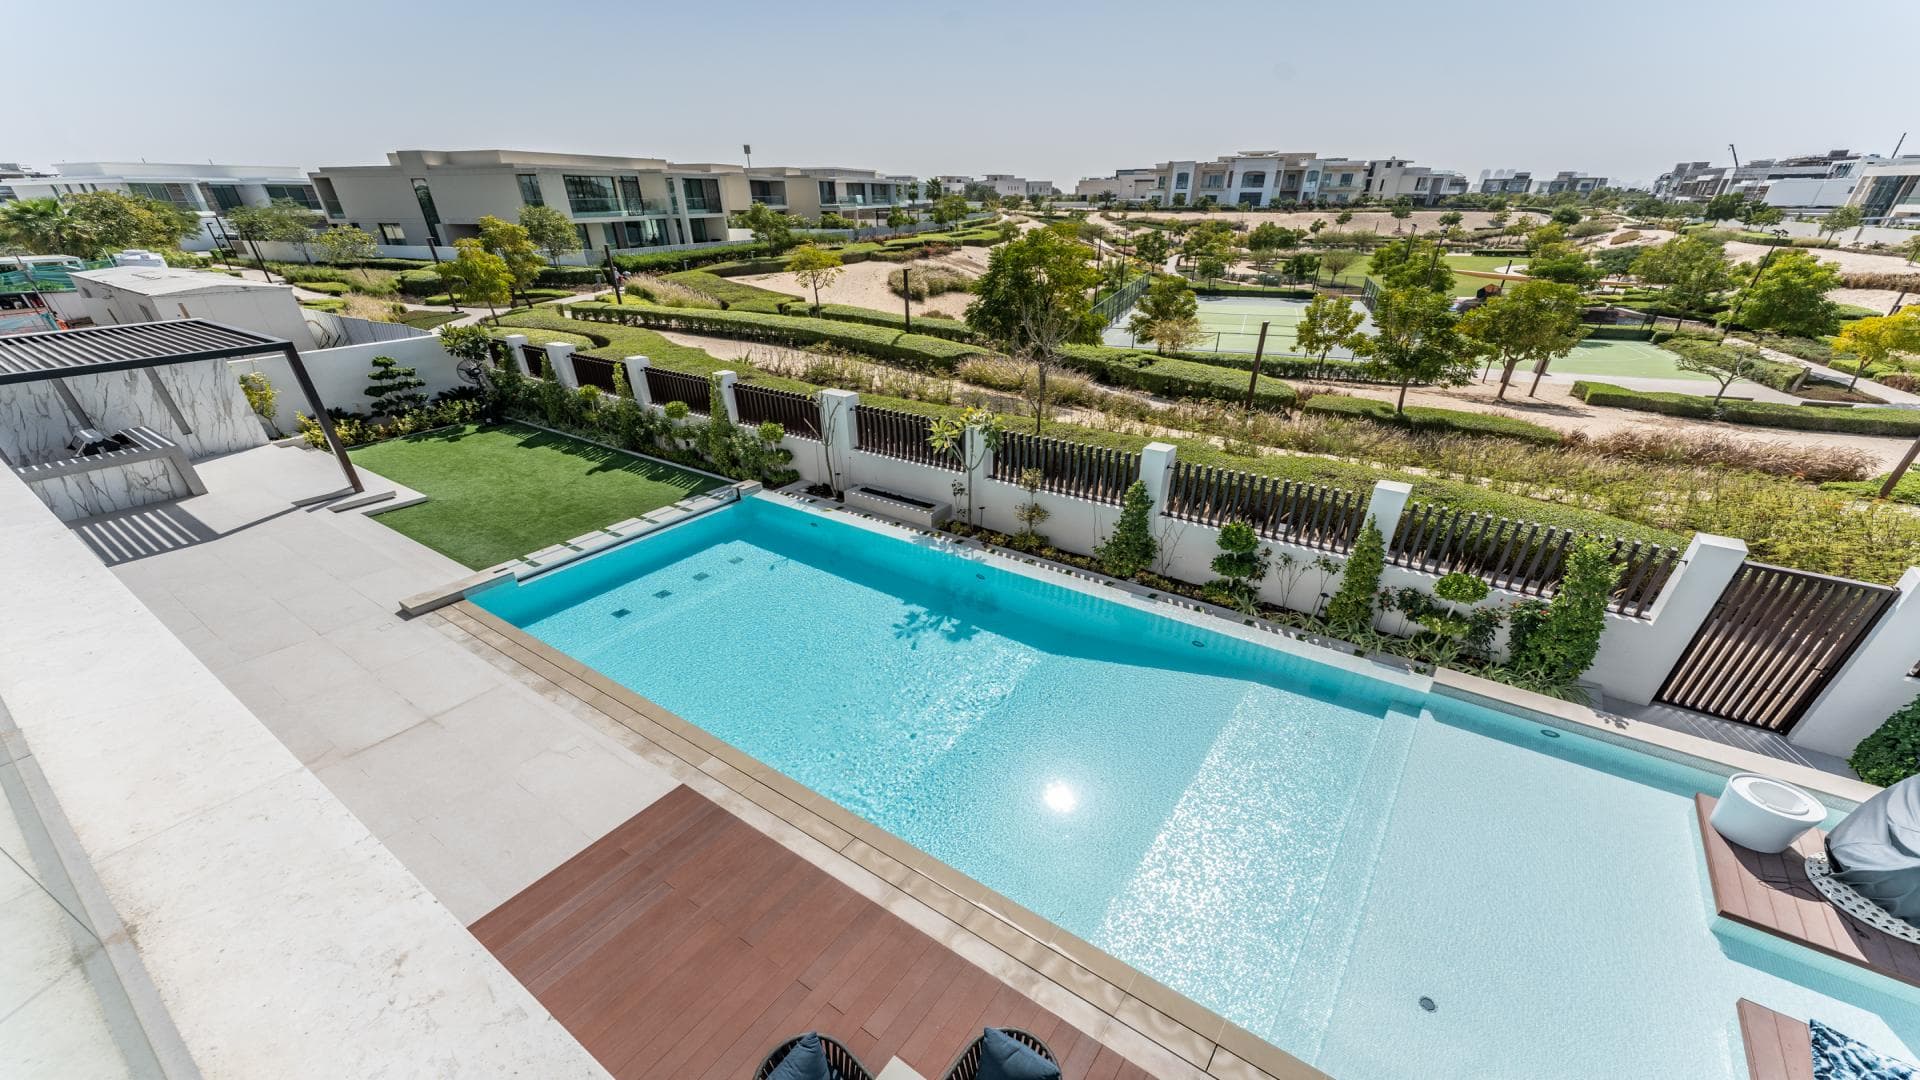 5 Bedroom Villa For Sale Dubai Hills Lp17448 1f41f19805321a00.jpg